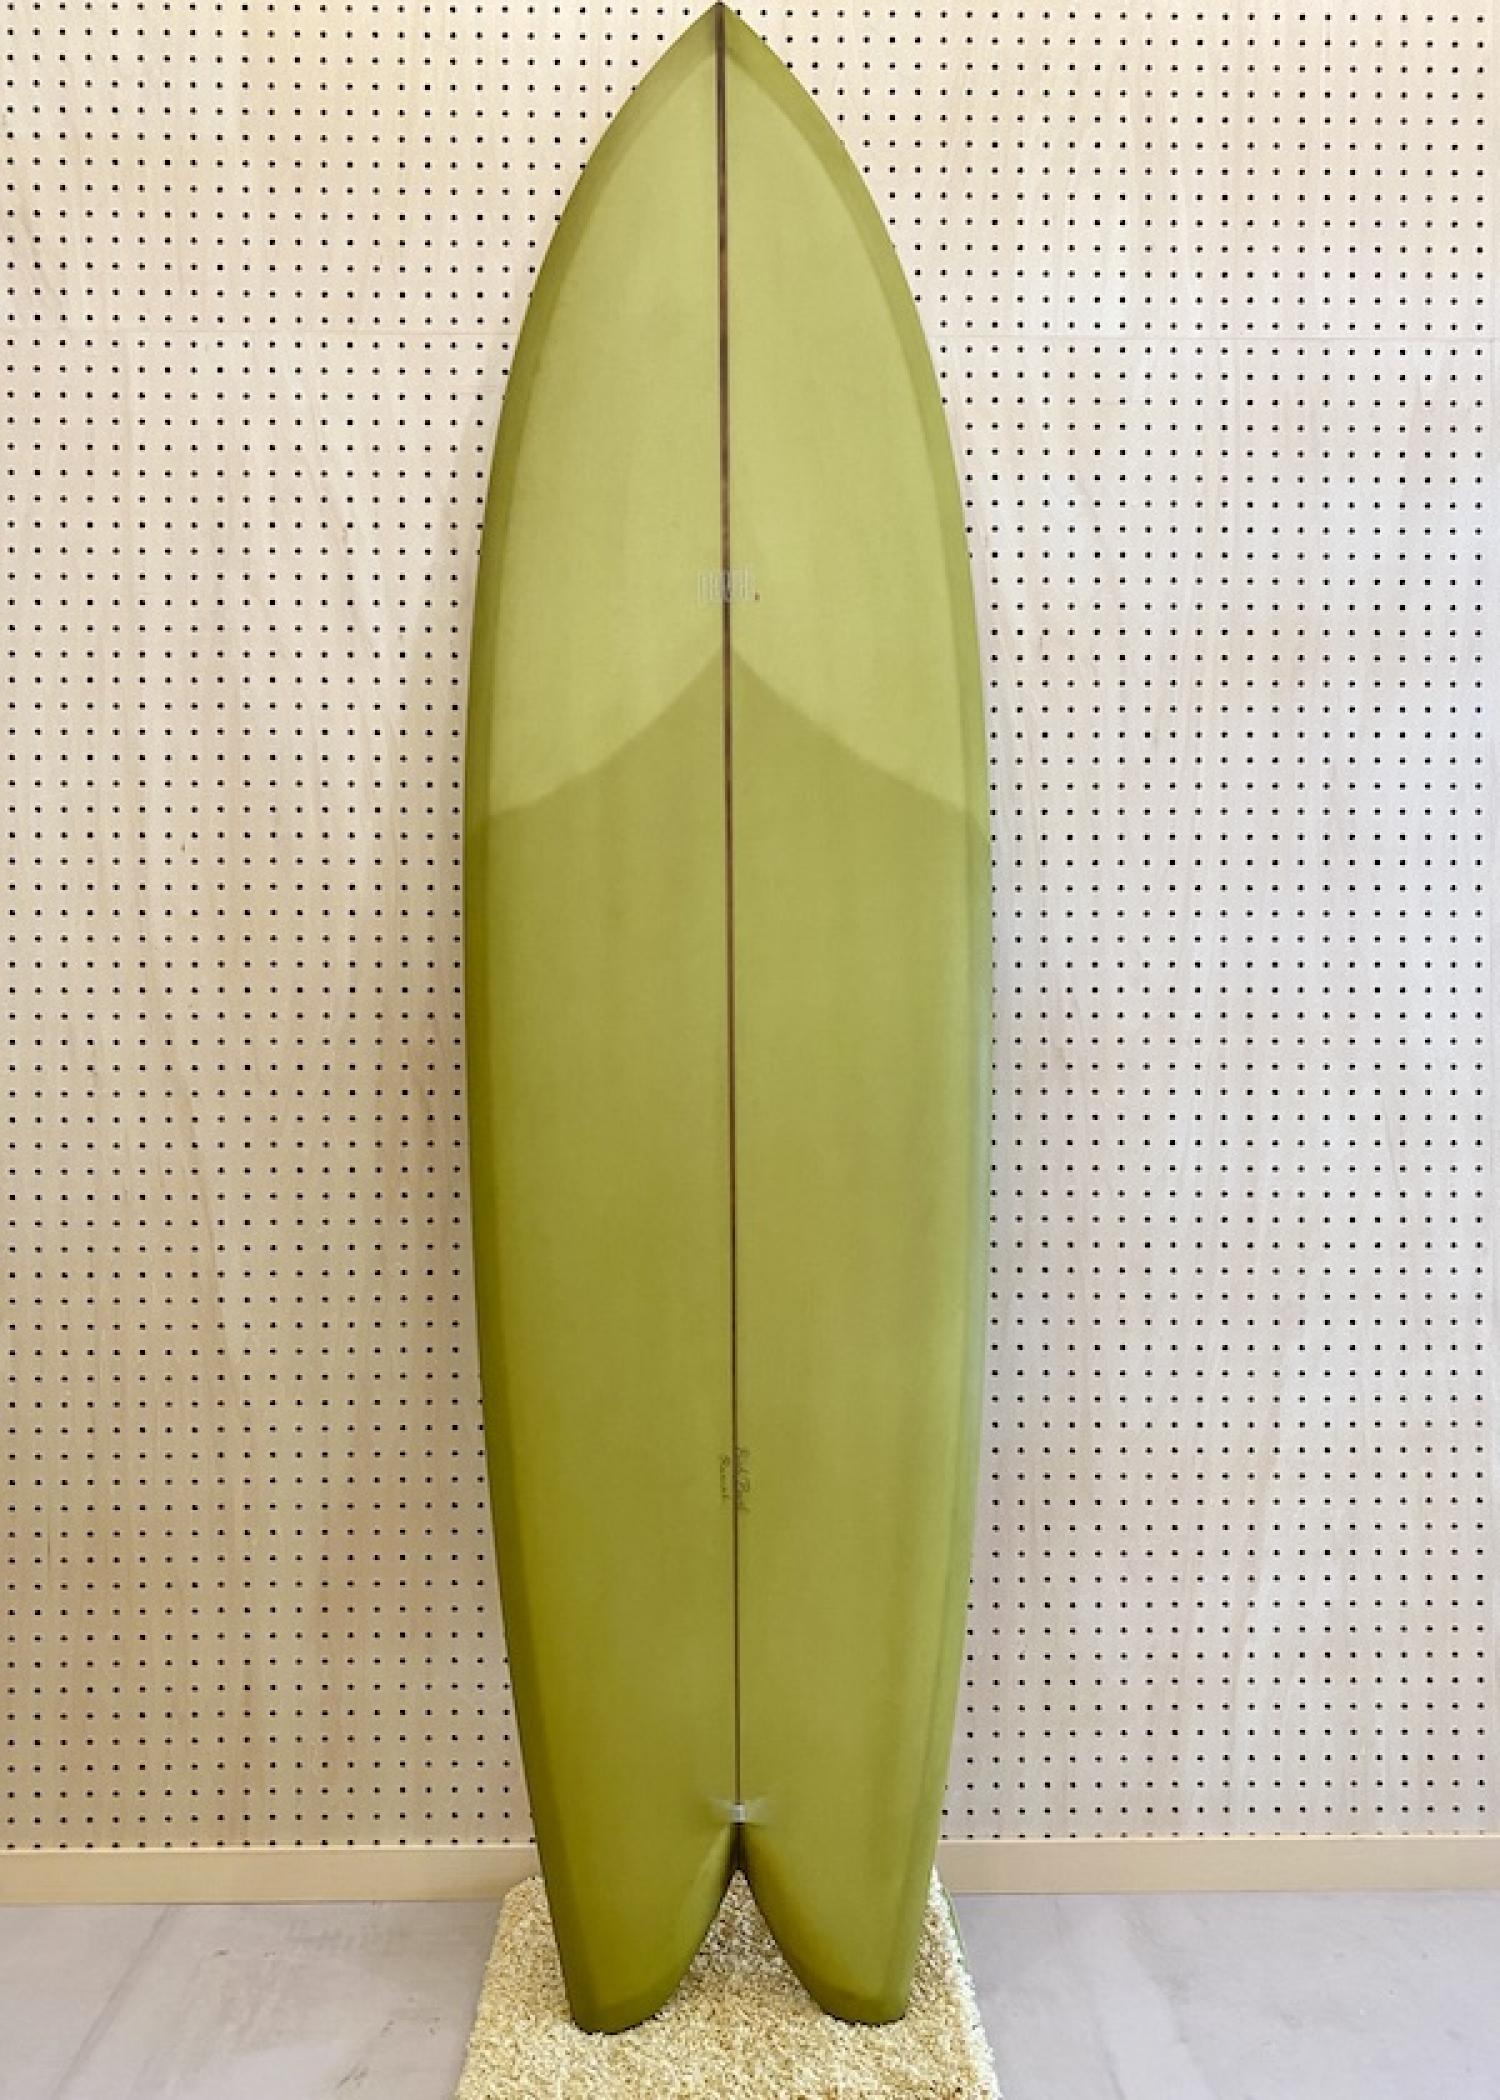 USED BOARDS (CARDIFF SURFBORDS 7.6 )|沖縄サーフィンショップ「YES 